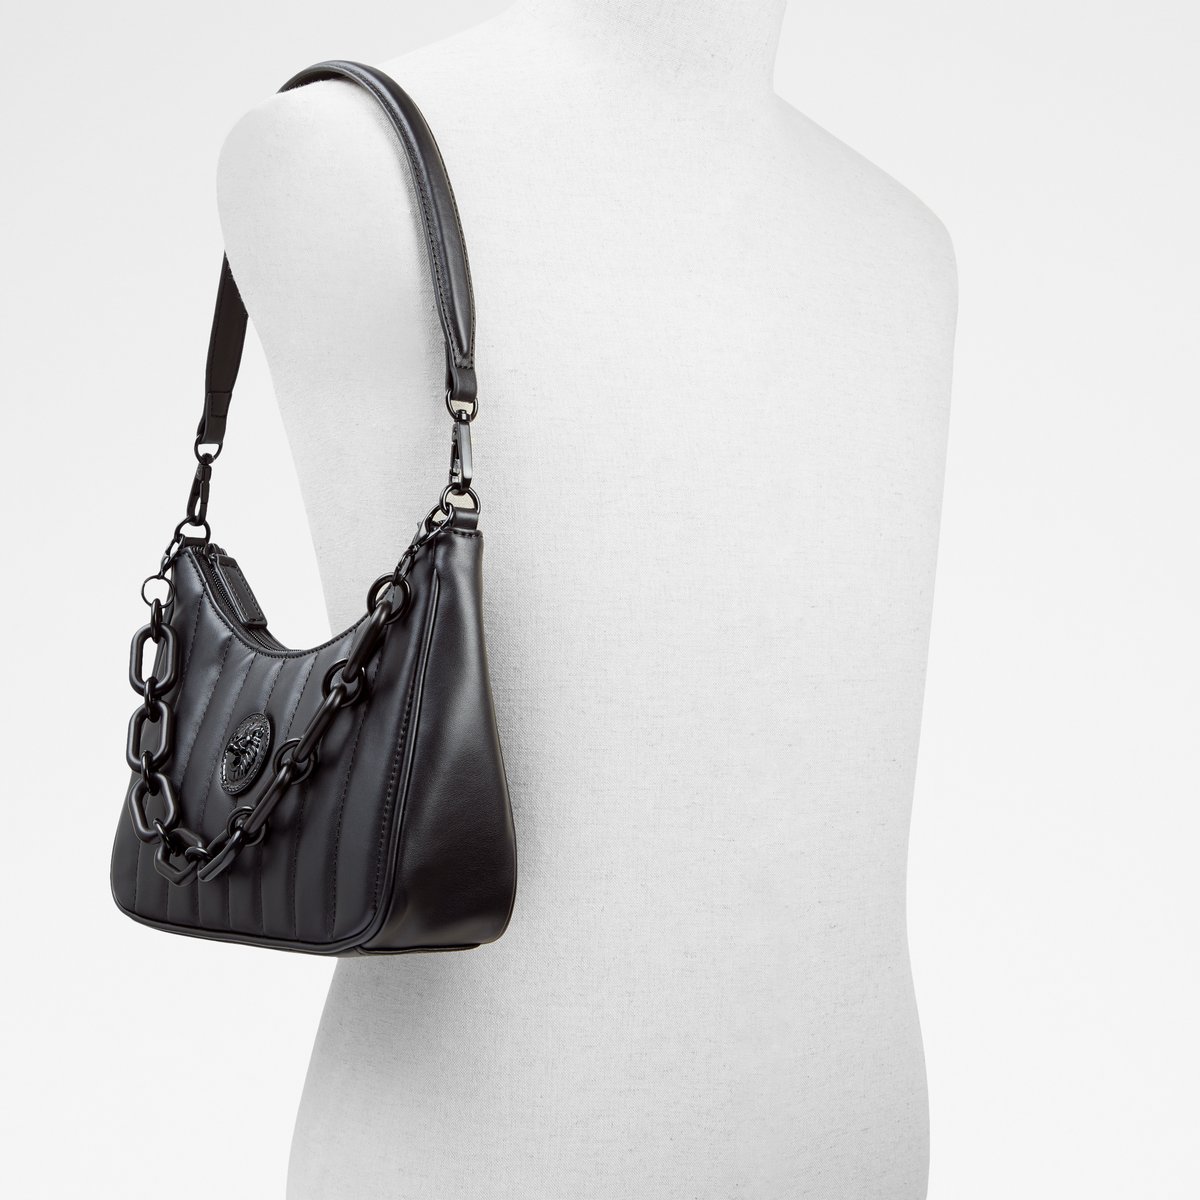 ALDO Women's Powsy Top Handle Bag, Black Overflow: Handbags